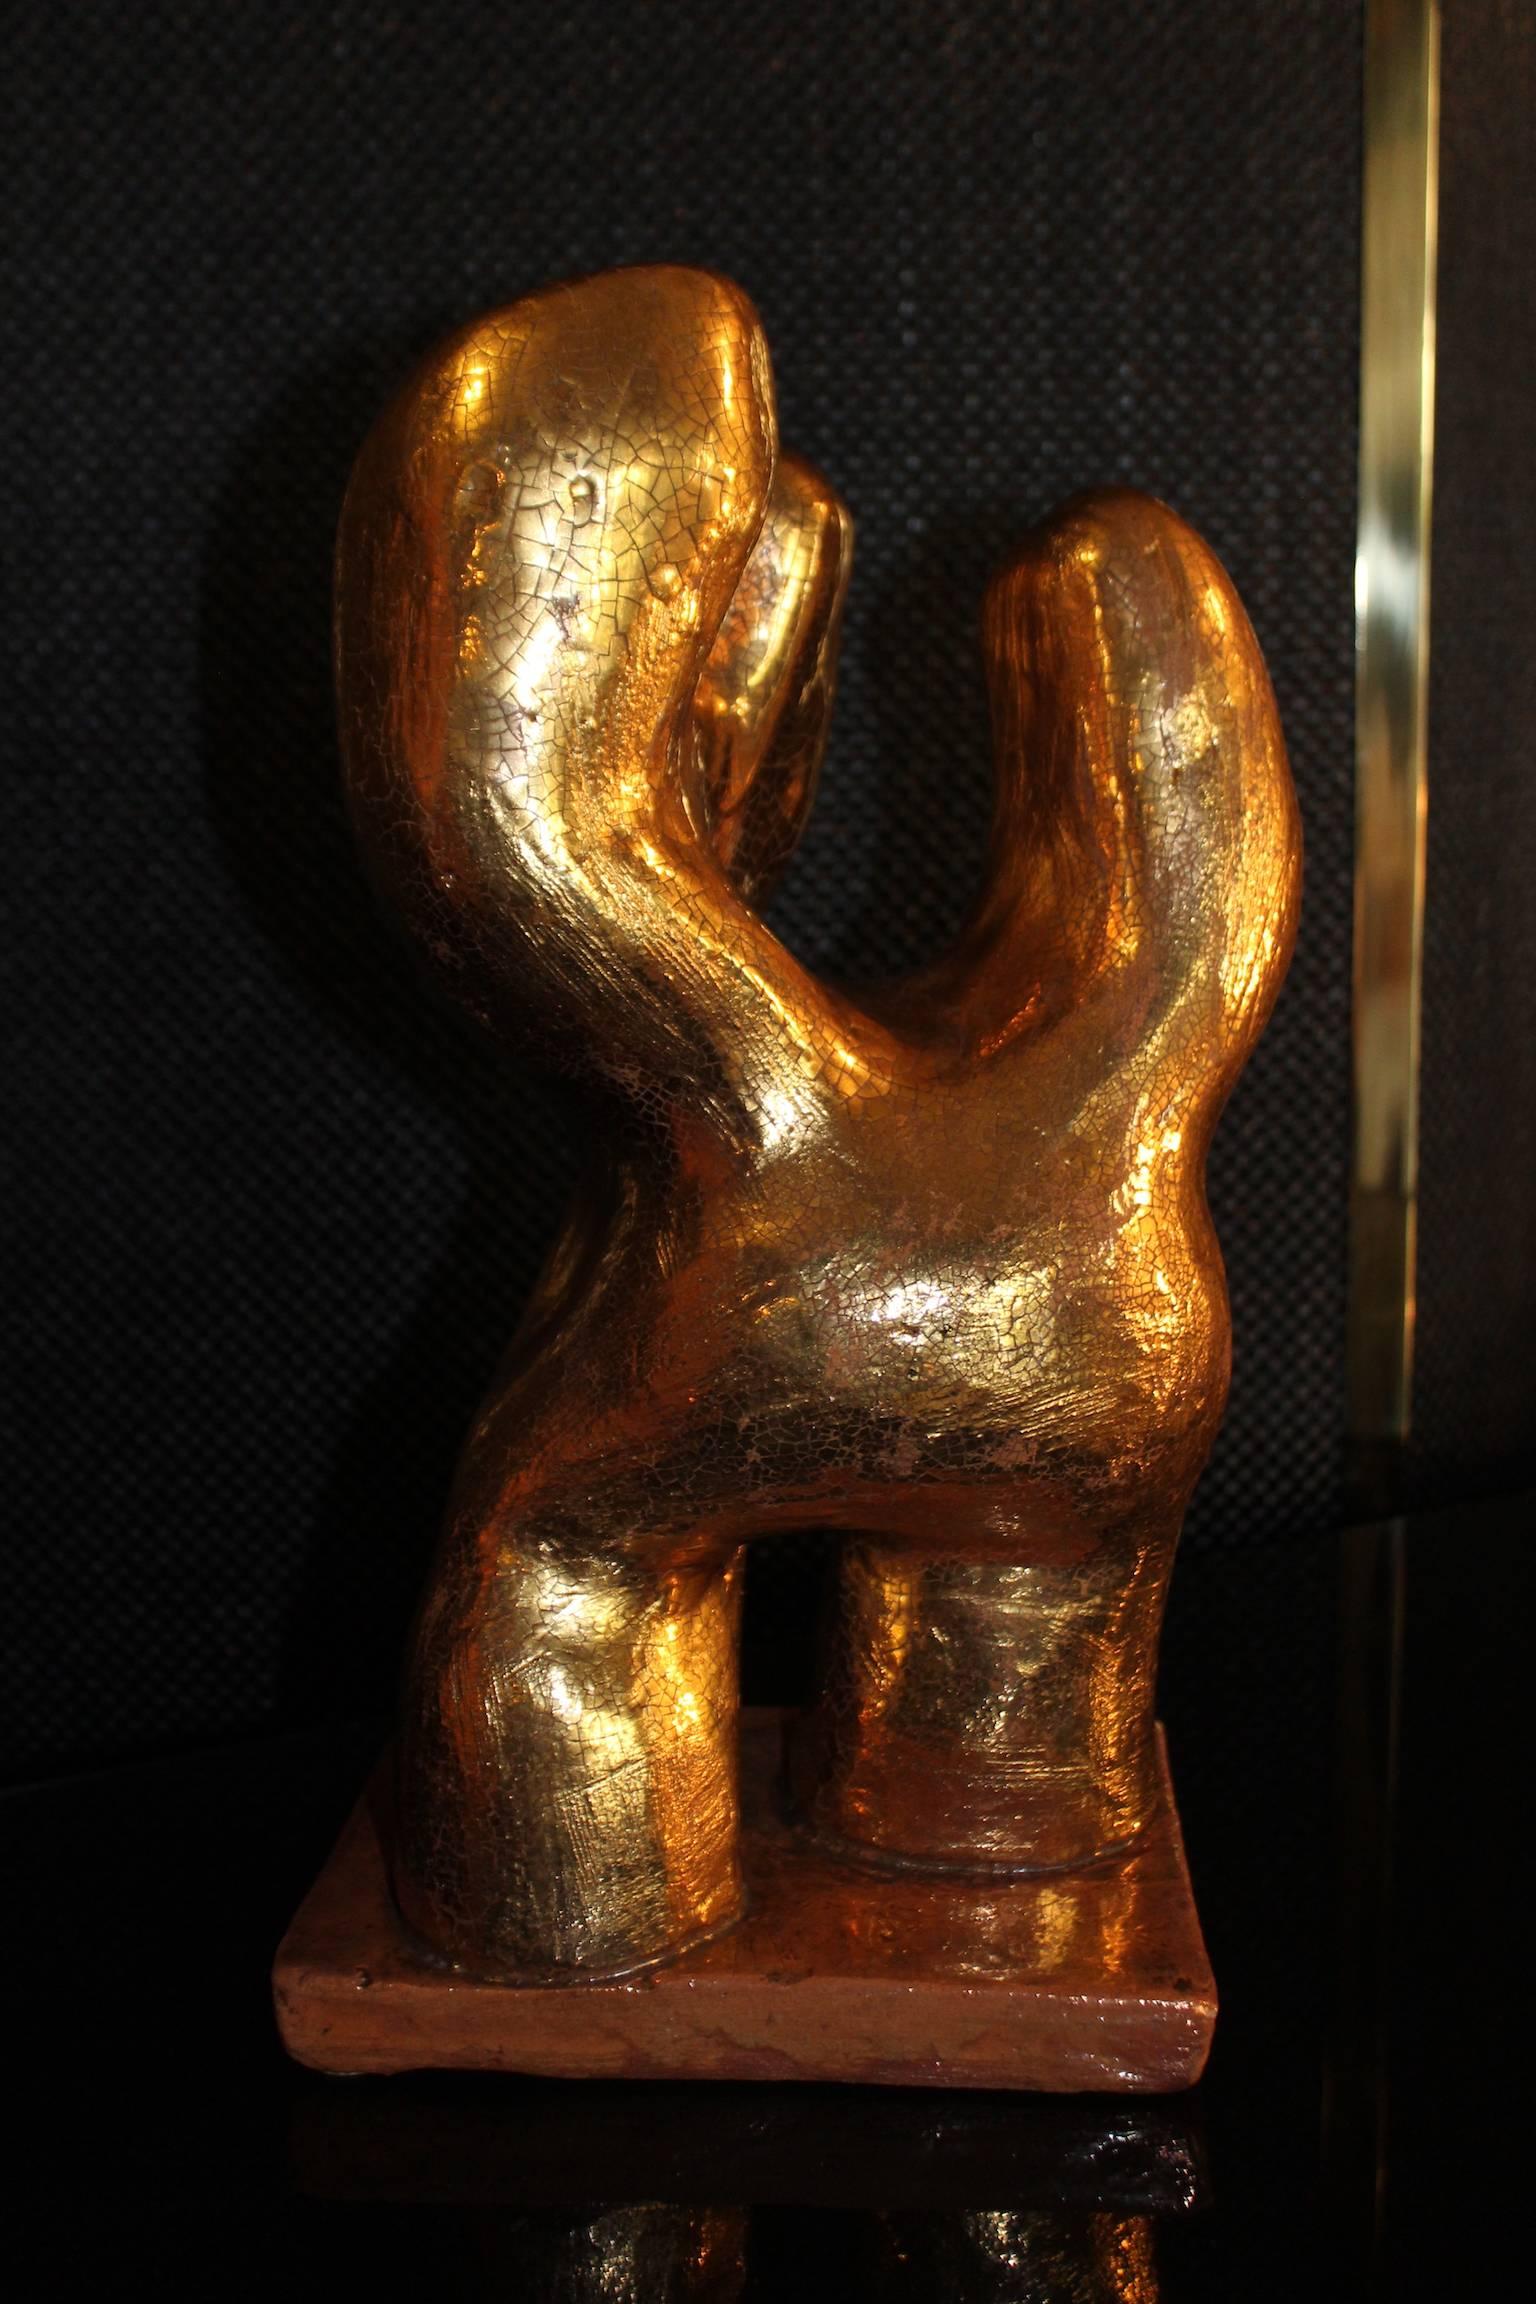 1972 Lino Bersani polymorphic ceramic sculpture gold-colored
